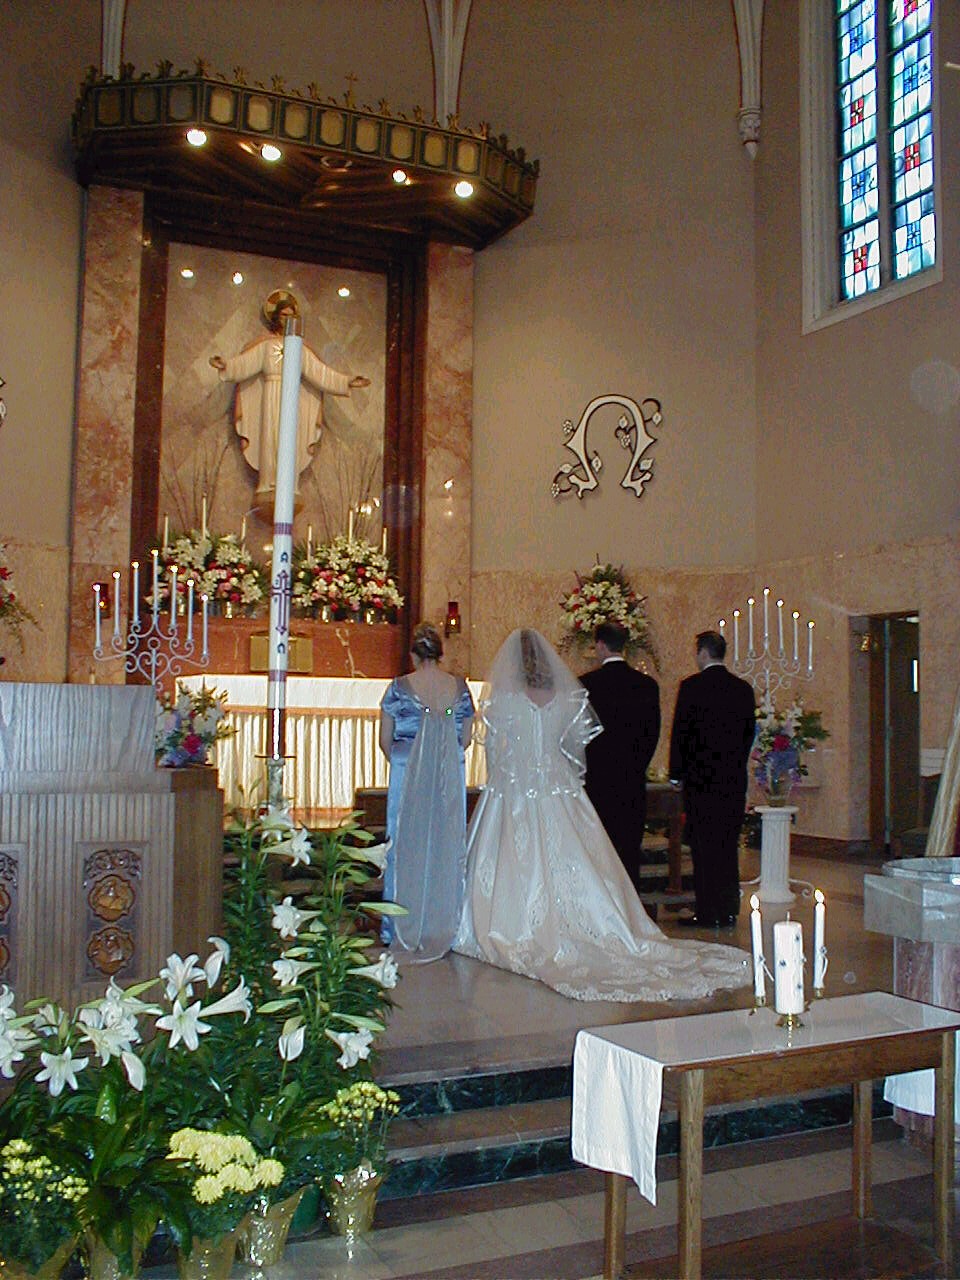 weddingceremony2.bmp. Uploaded by Erik Hoffmann on 1/18/2004. 